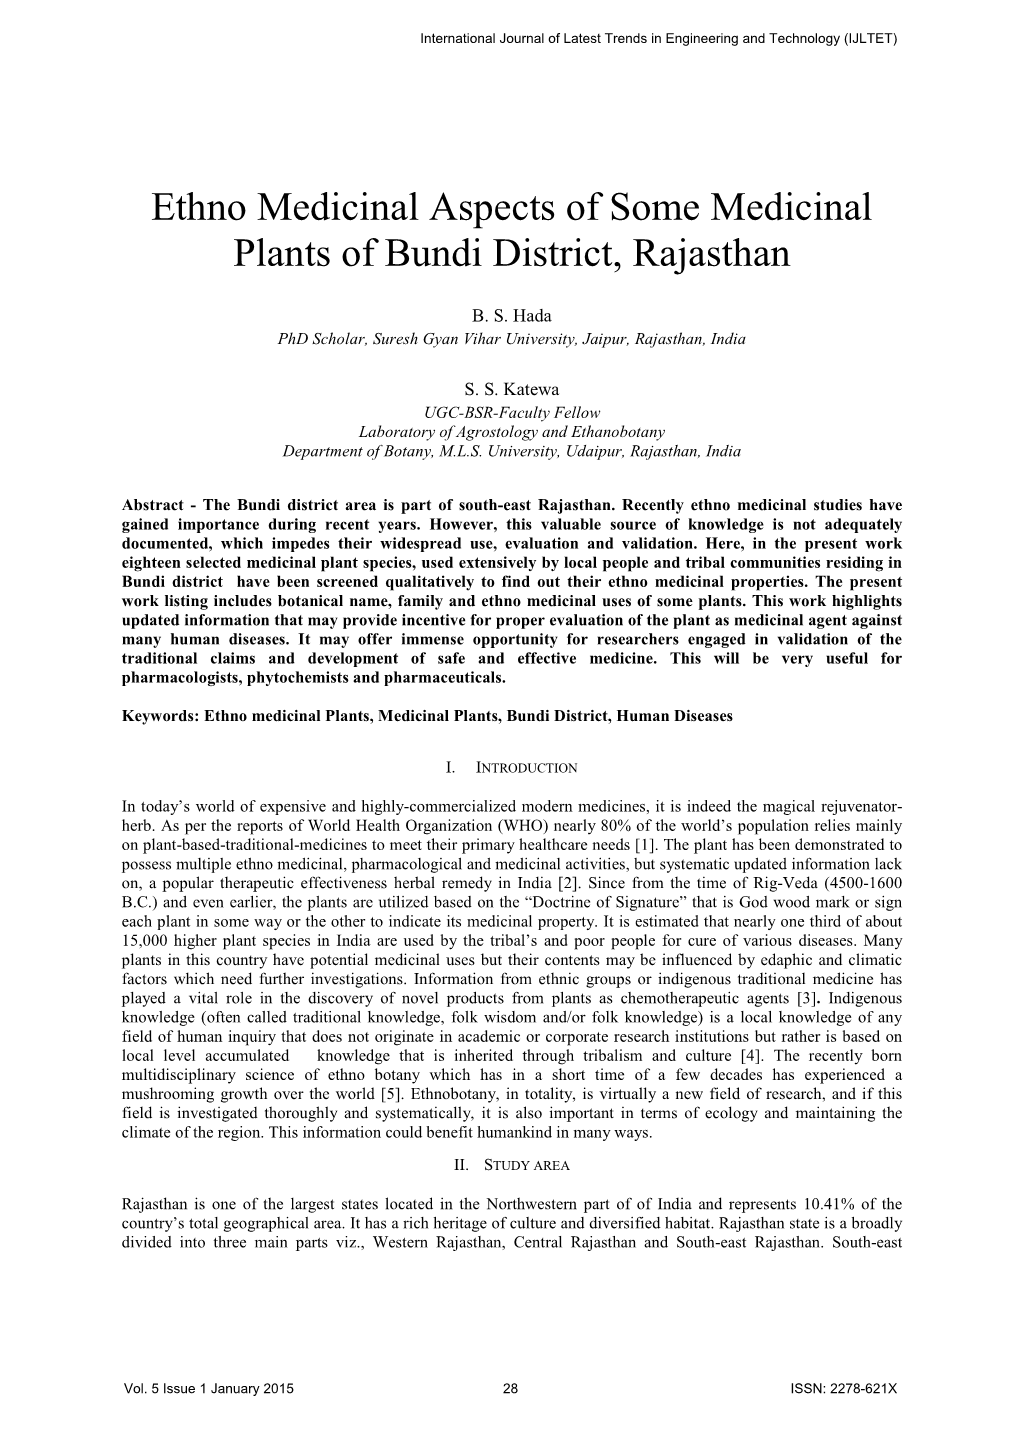 Ethno Medicinal Aspects of Some Medicinal Plants of Bundi District, Rajasthan